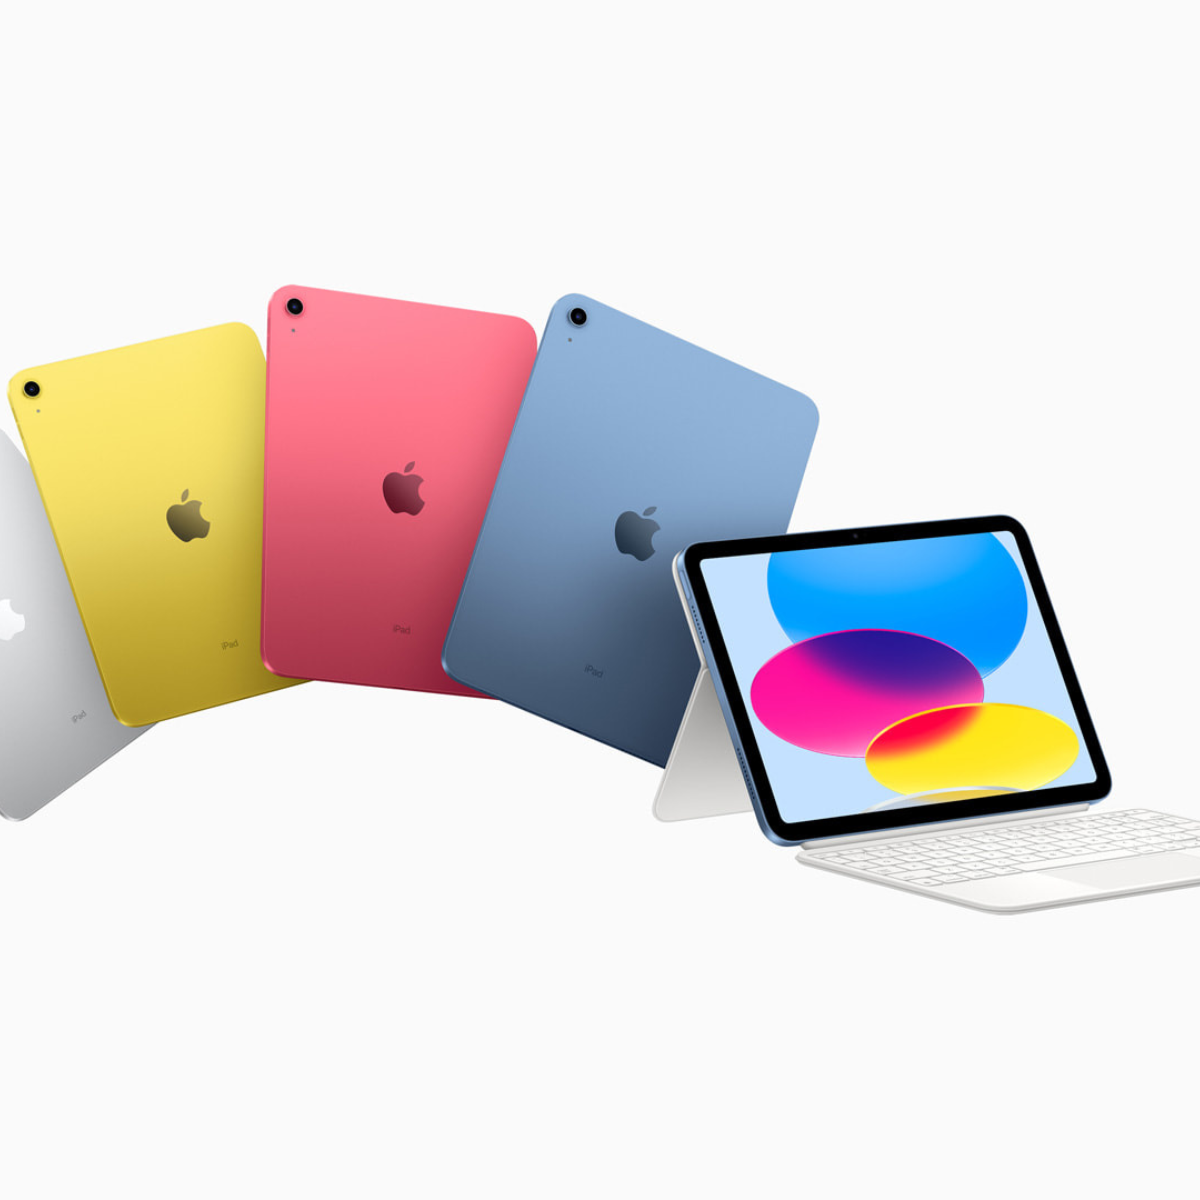 iPad air: Apple planning to refresh iPads & Macs next year; line